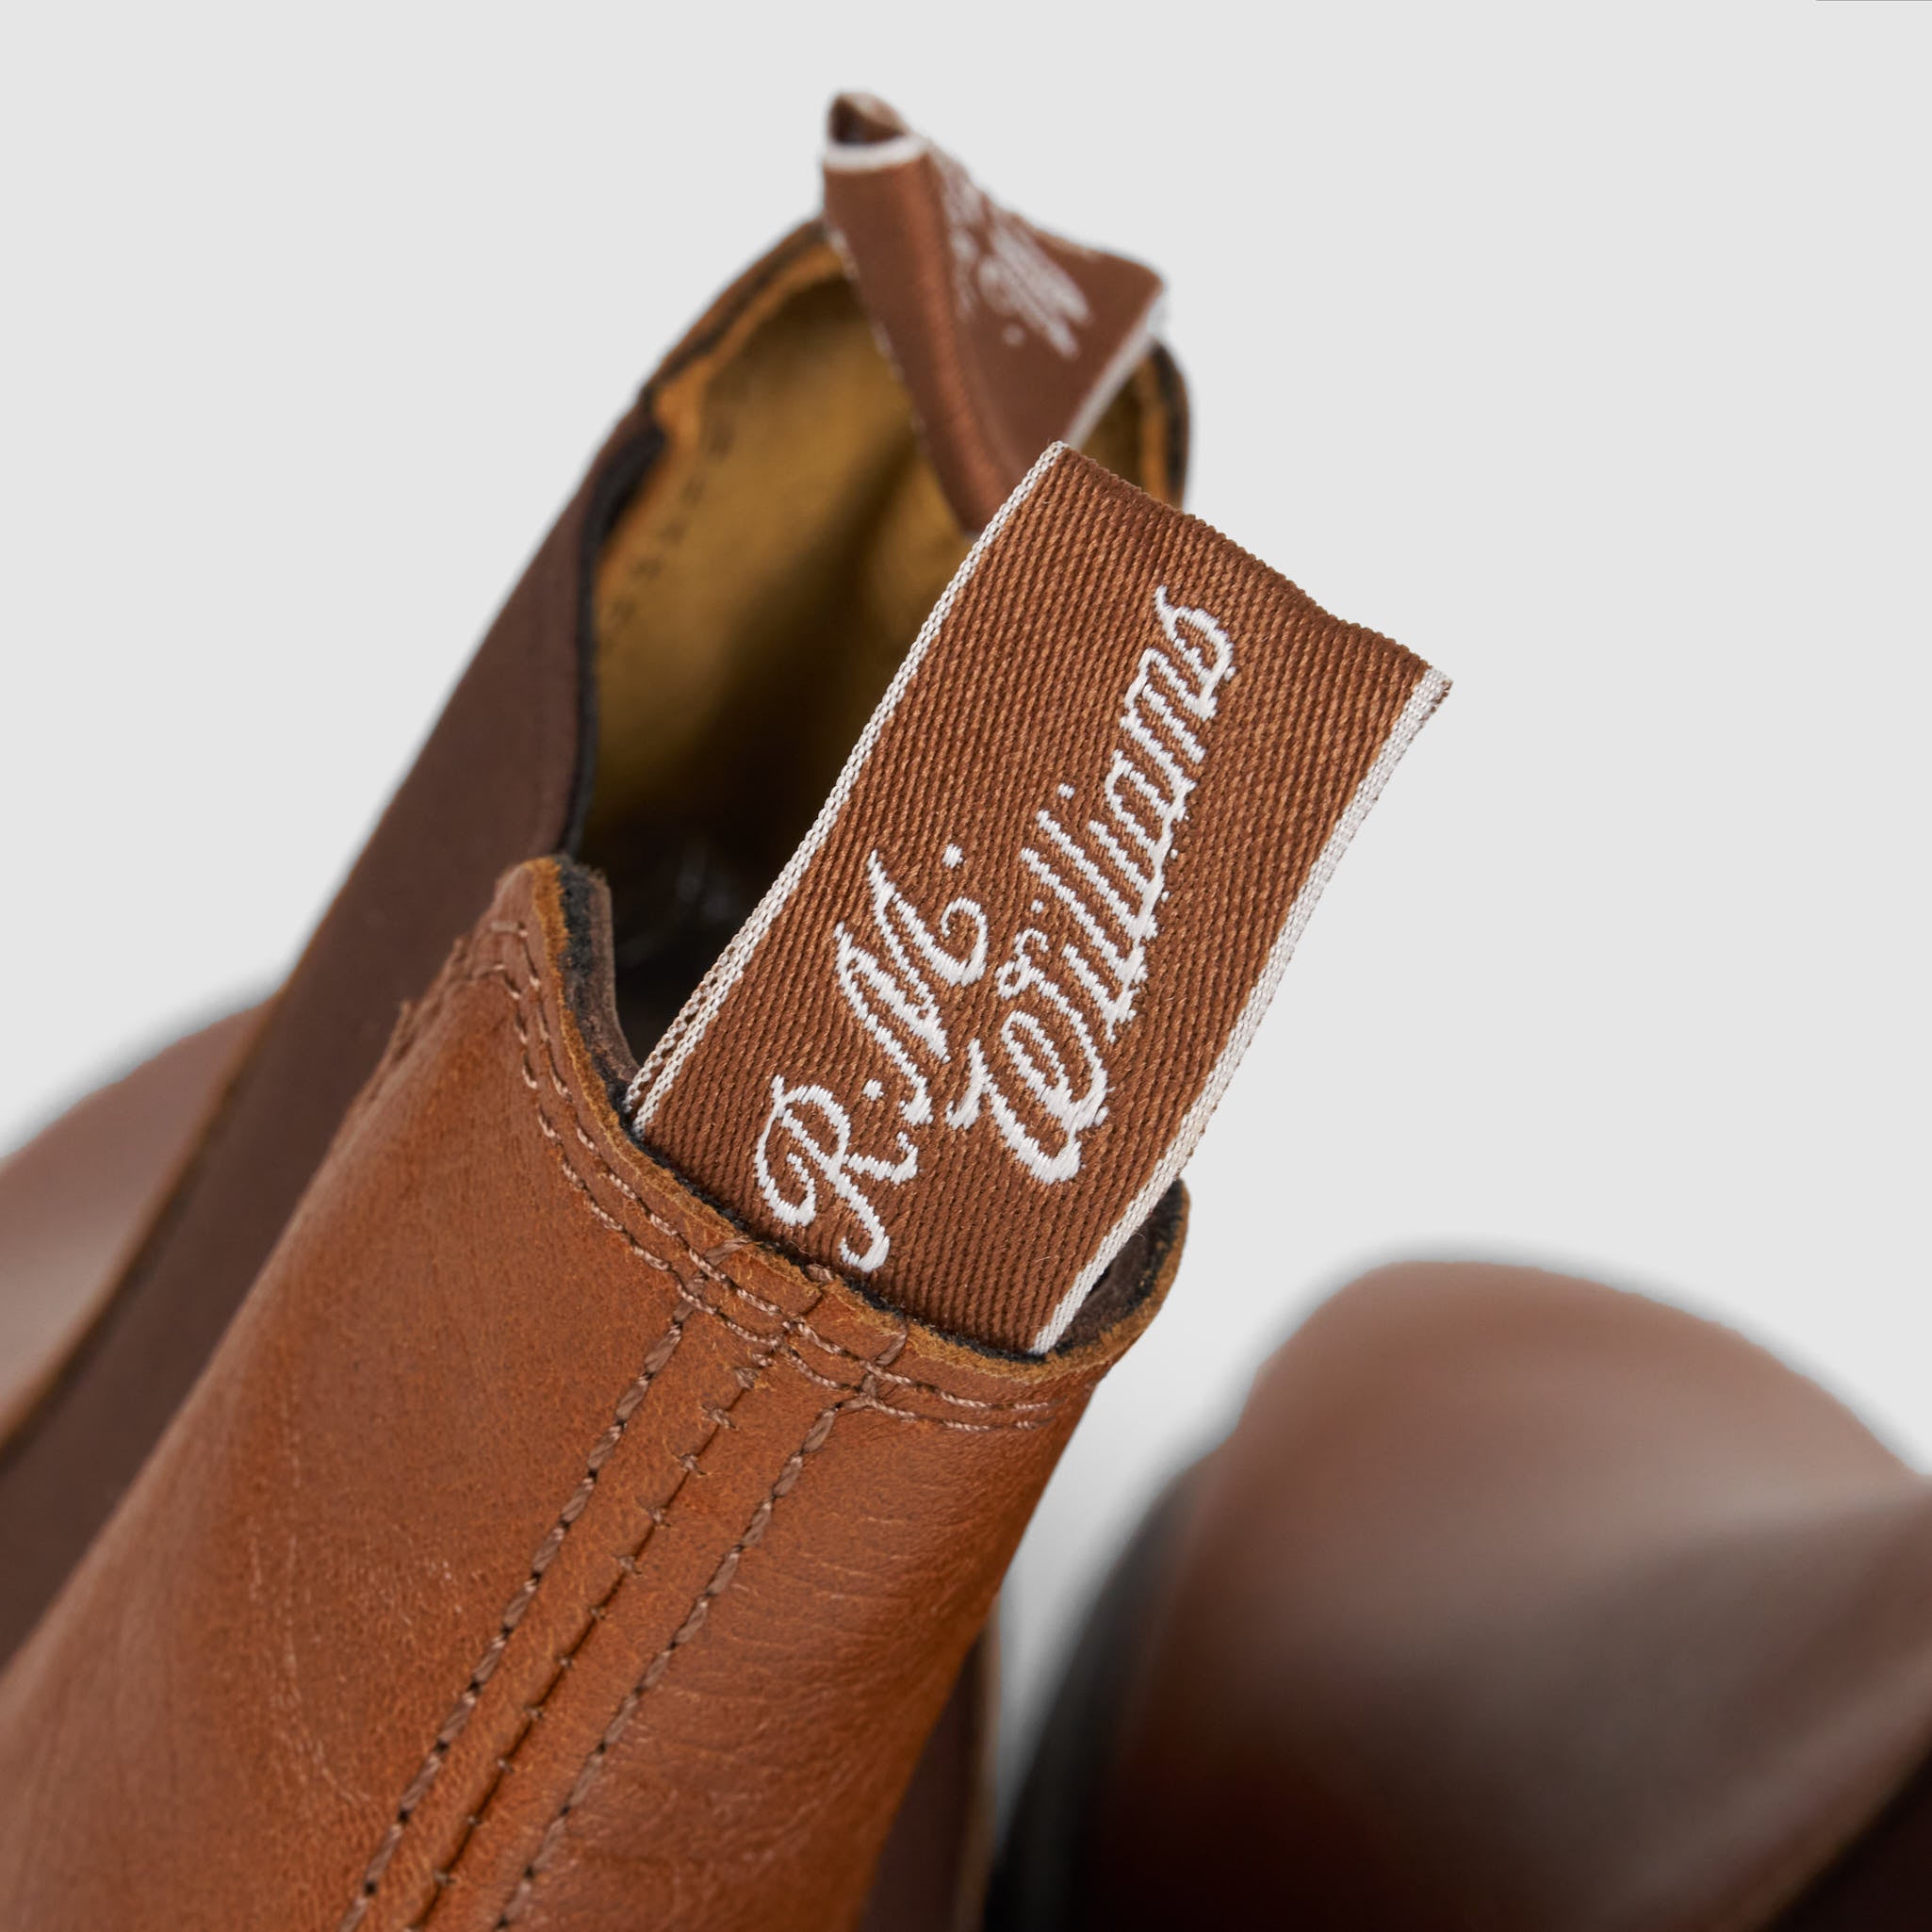 RM Williams Kangaroo Craftsman Boot - W. Titley & Co